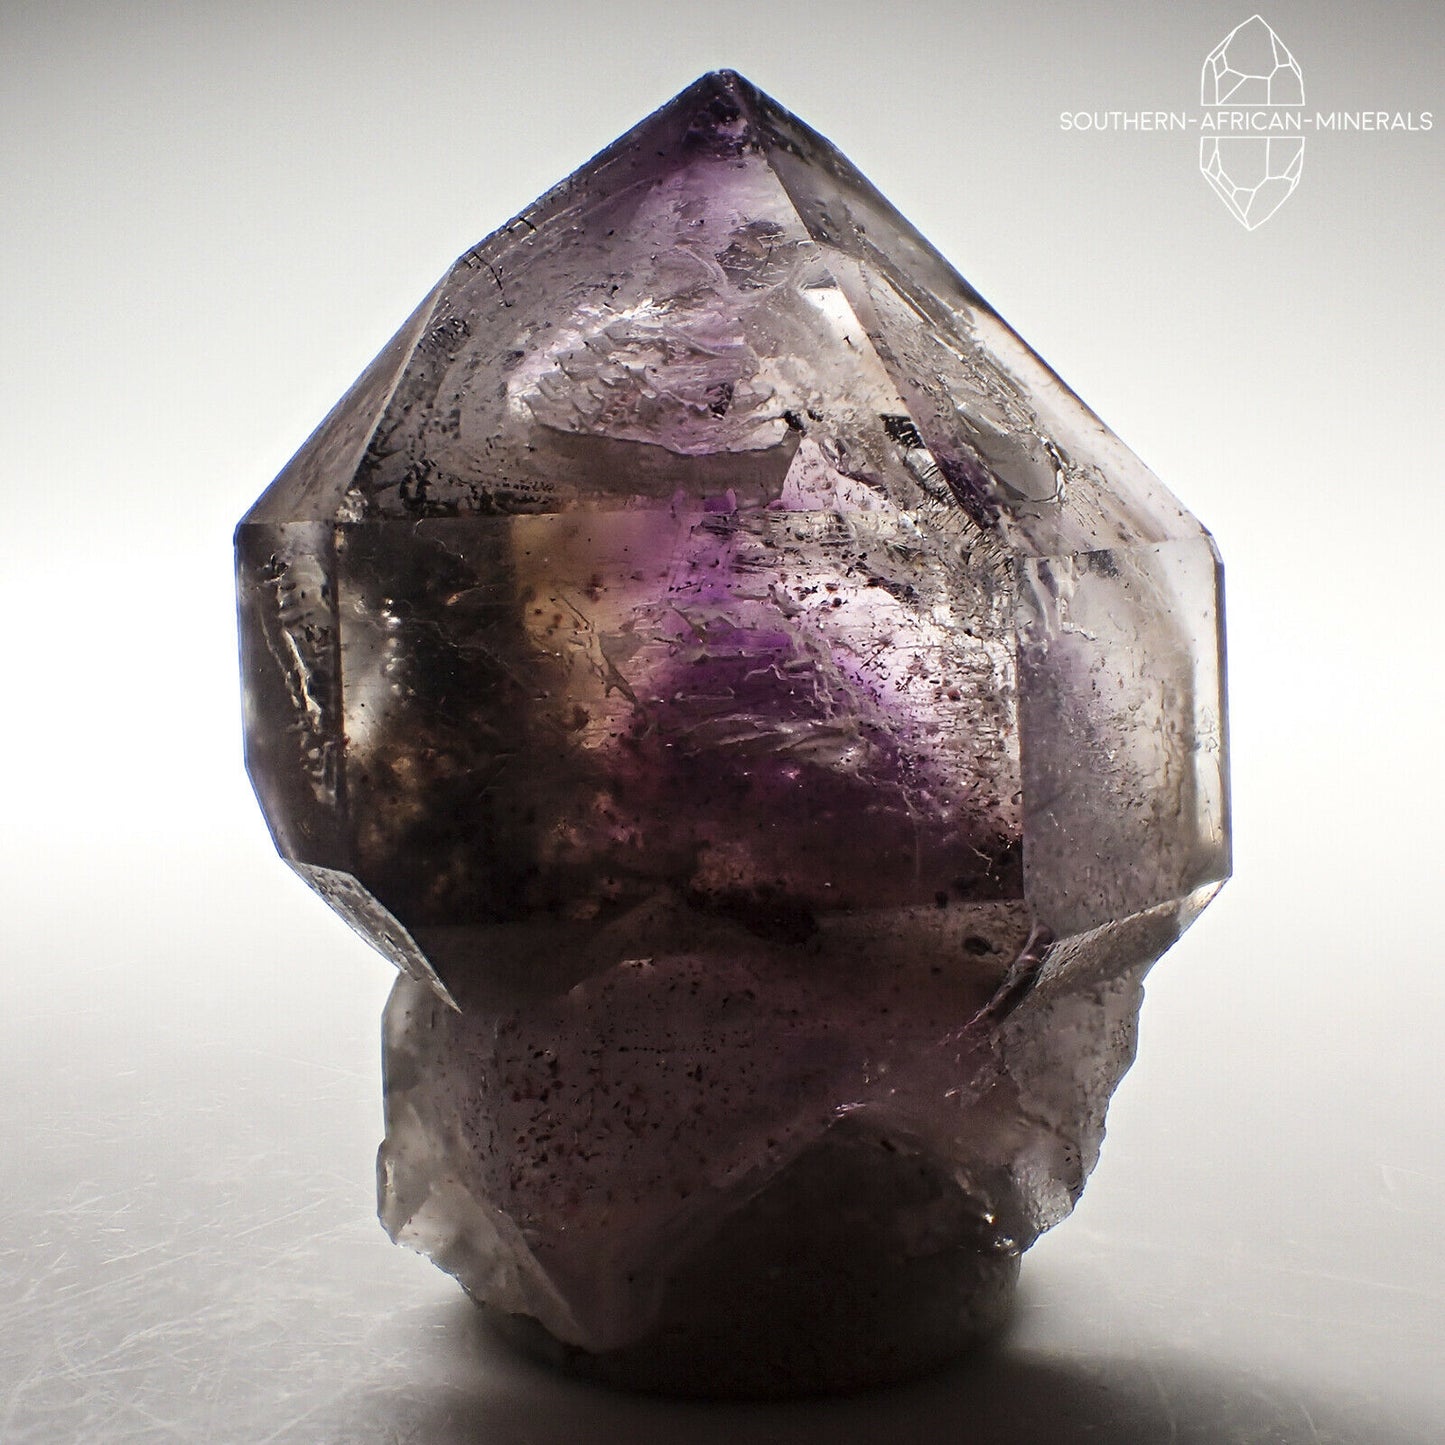 Brandberg Royal Amethyst Smoky Sceptre Quartz Crystal, Goboboseb, Namibia